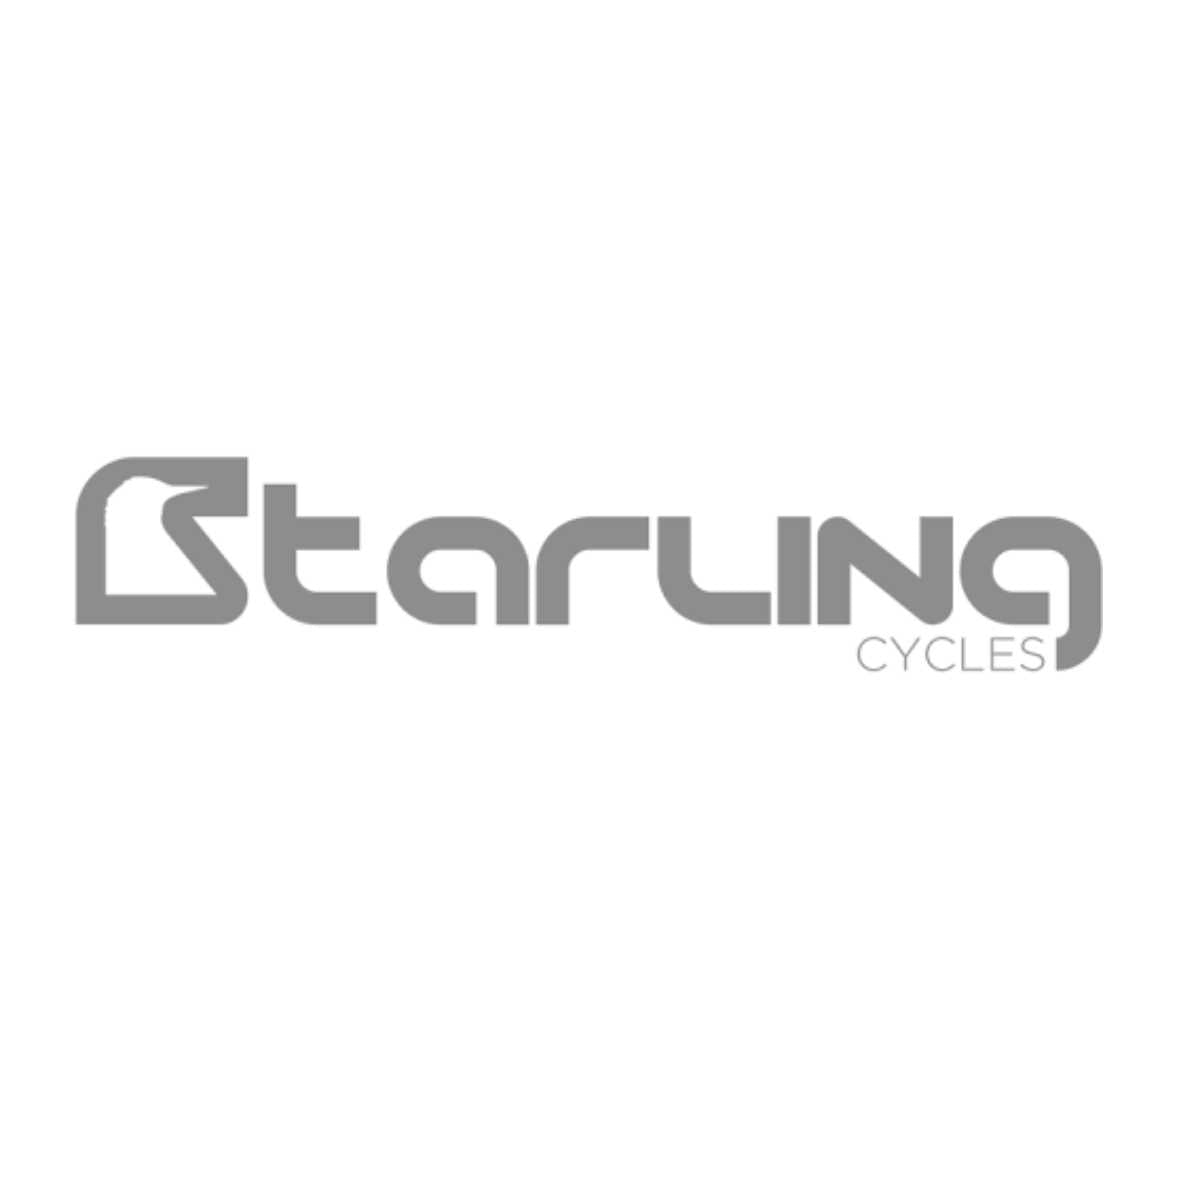 Starling_Bikes_Logo